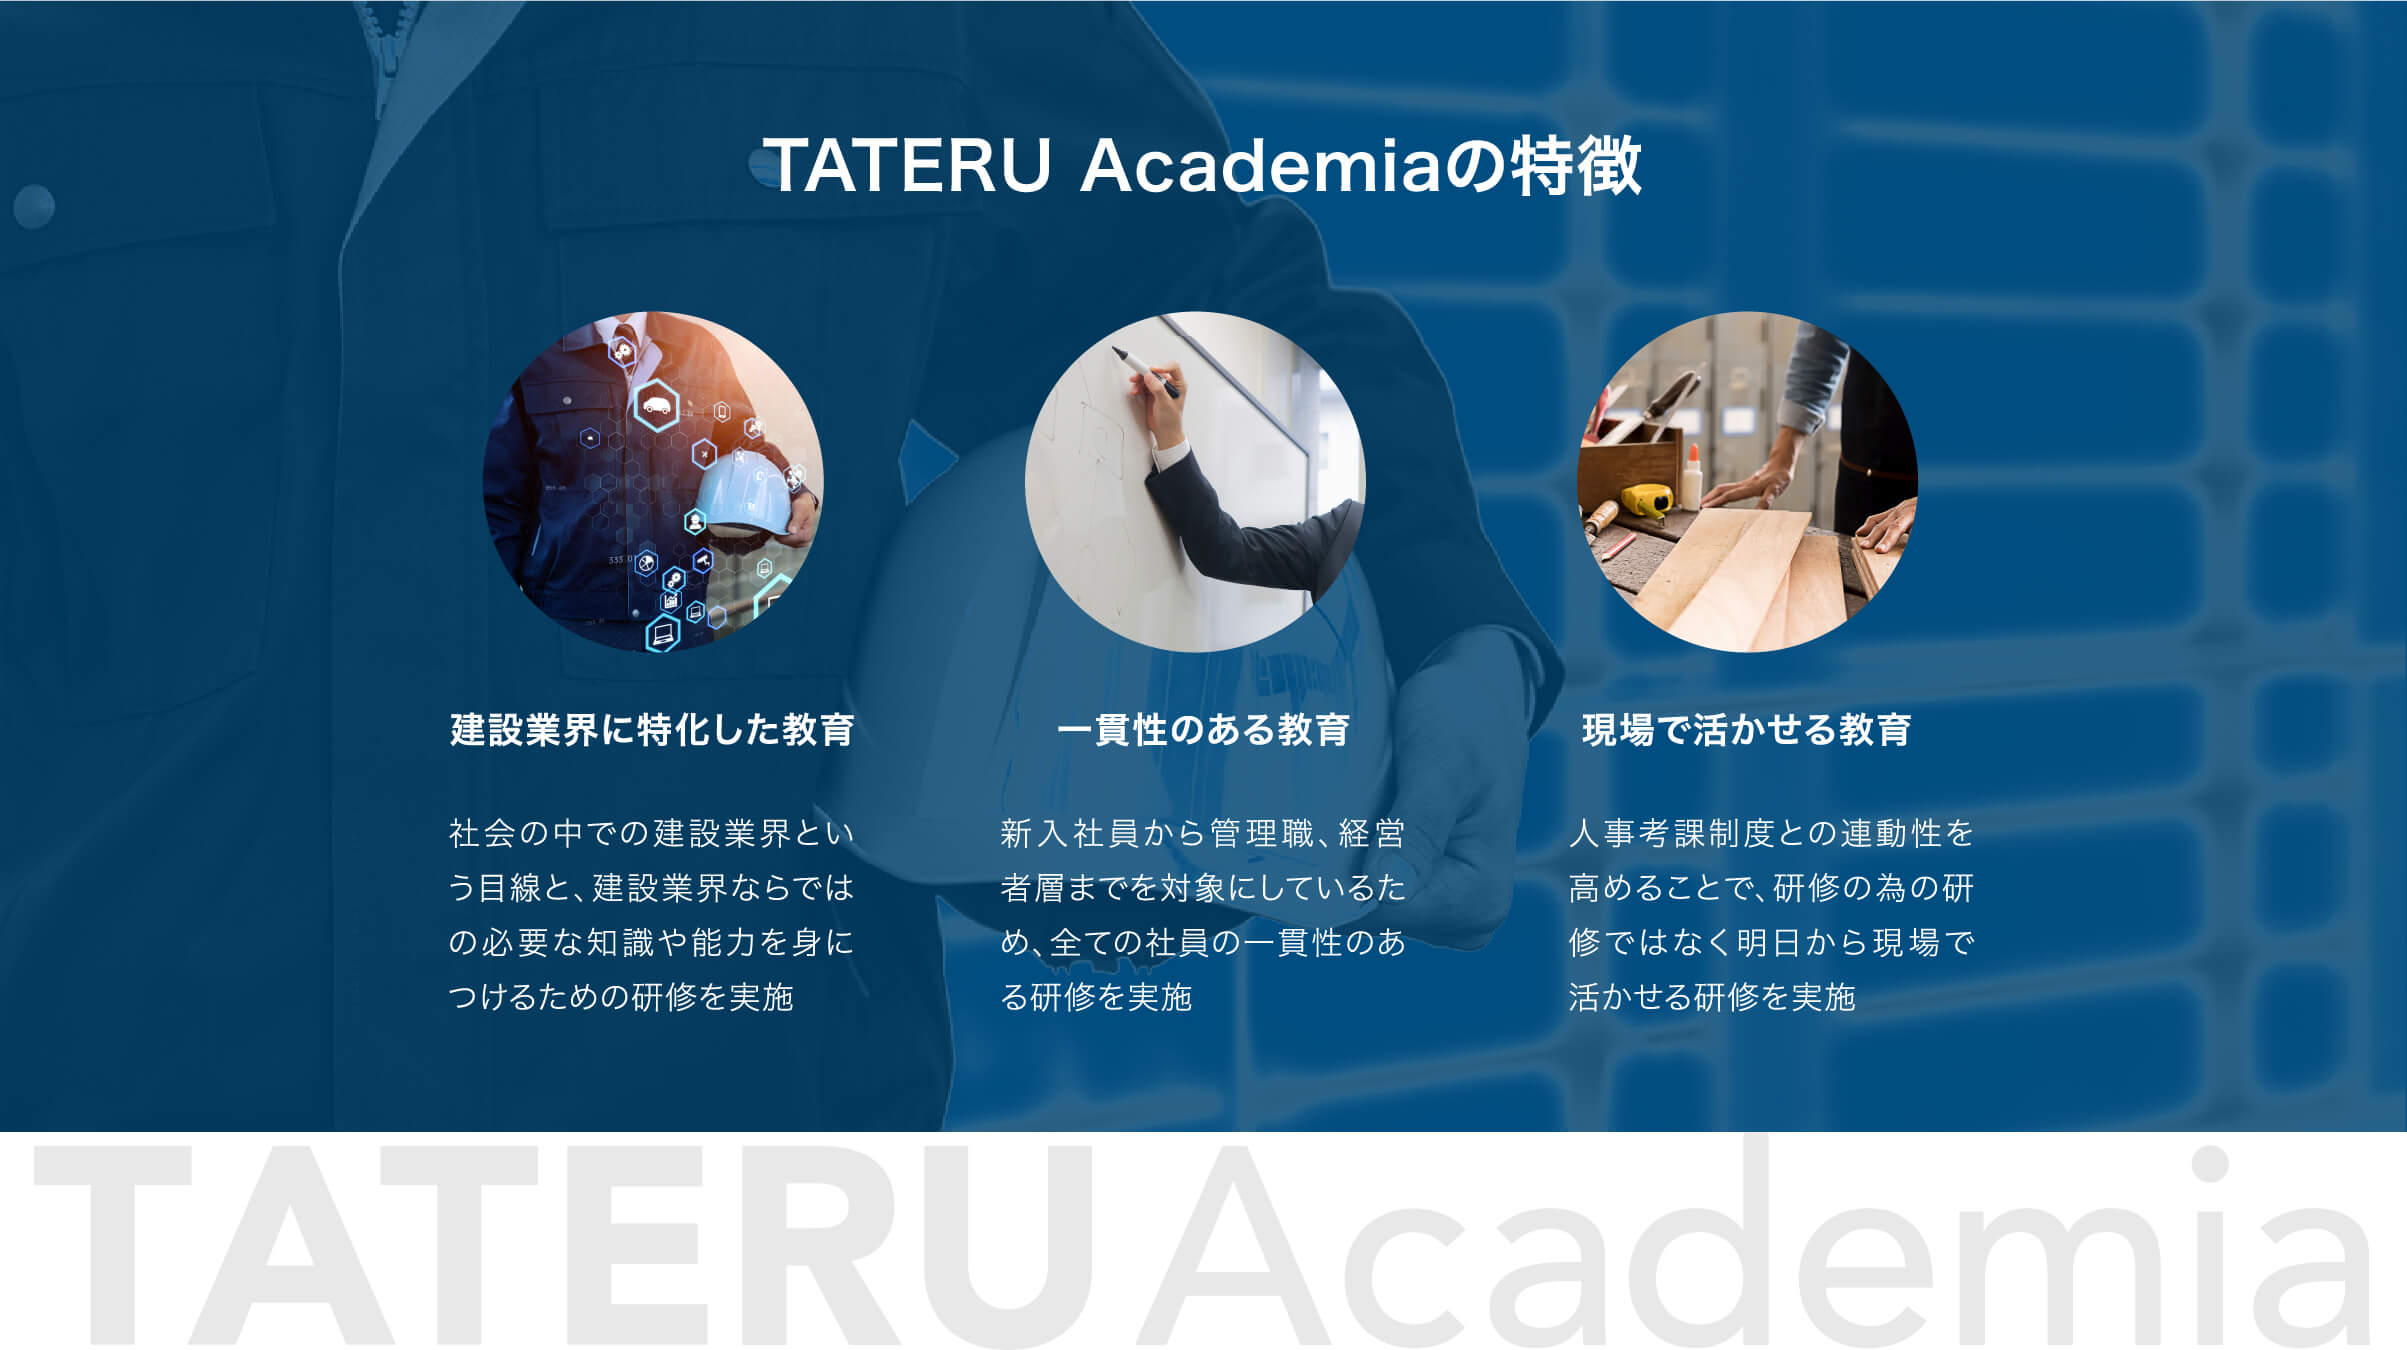 TATERU Academiaの特徴 建設業界に特化した教育、一貫性のある教育、現場で活かせる教育